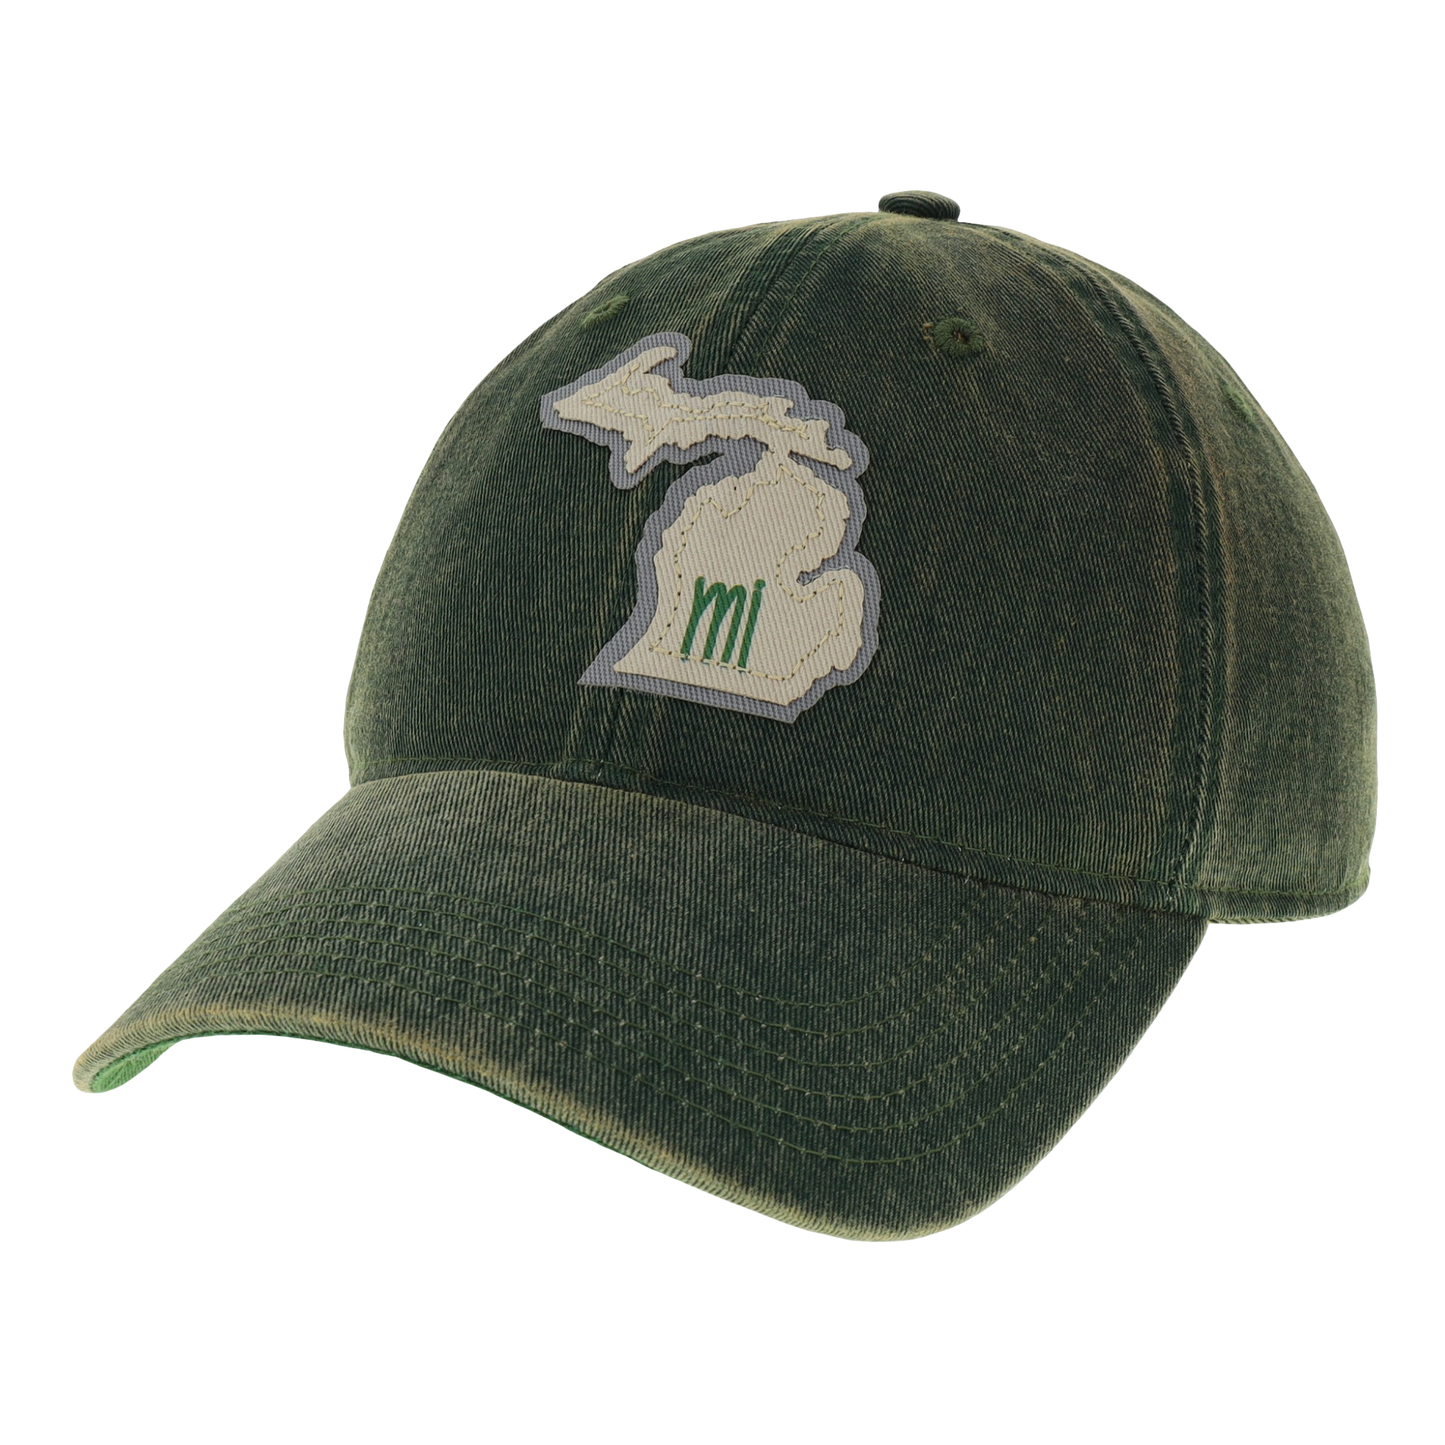 Michigan Old Favorite Hat in Green